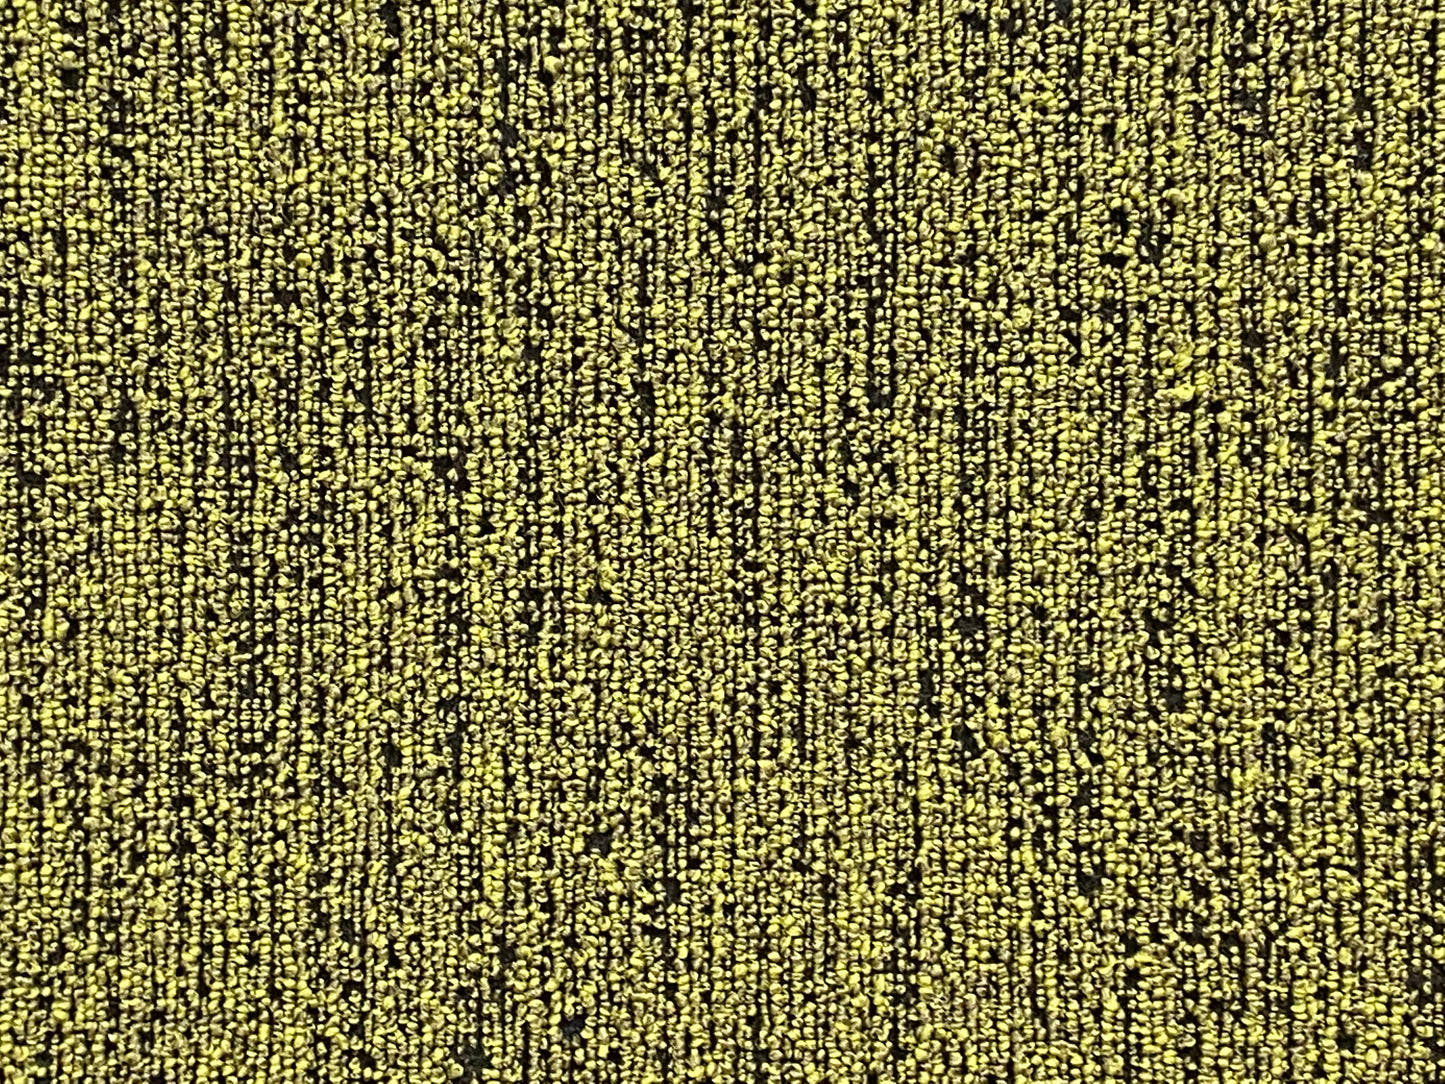 Shaw Yellow Green Carpet Tile-24"x 24"(12 Tiles/case, 48 sq. ft./case)